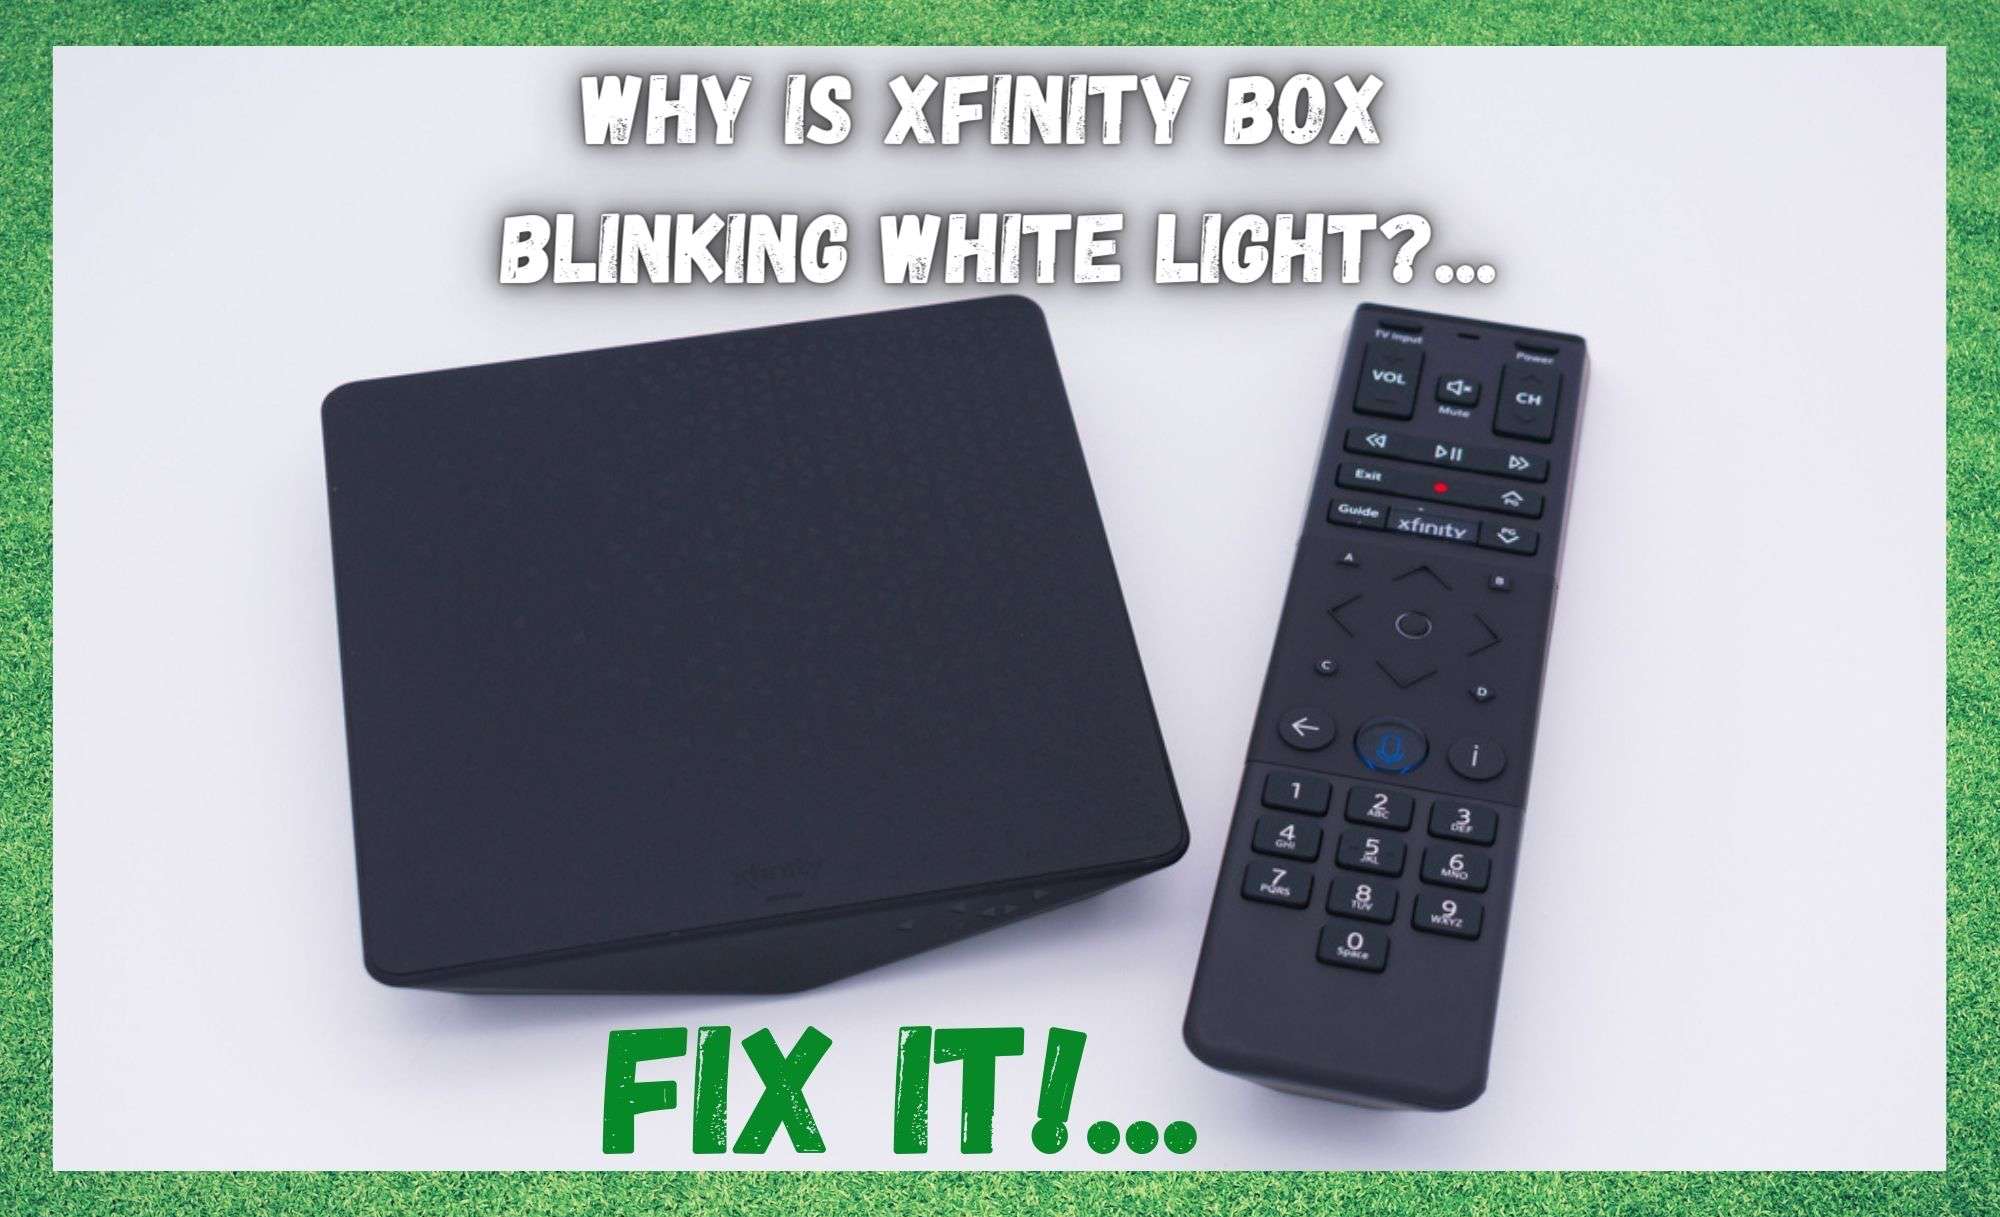 Xfinity Box سفيد روشني ڇو چمڪي رهي آهي؟ 4 اصلاح